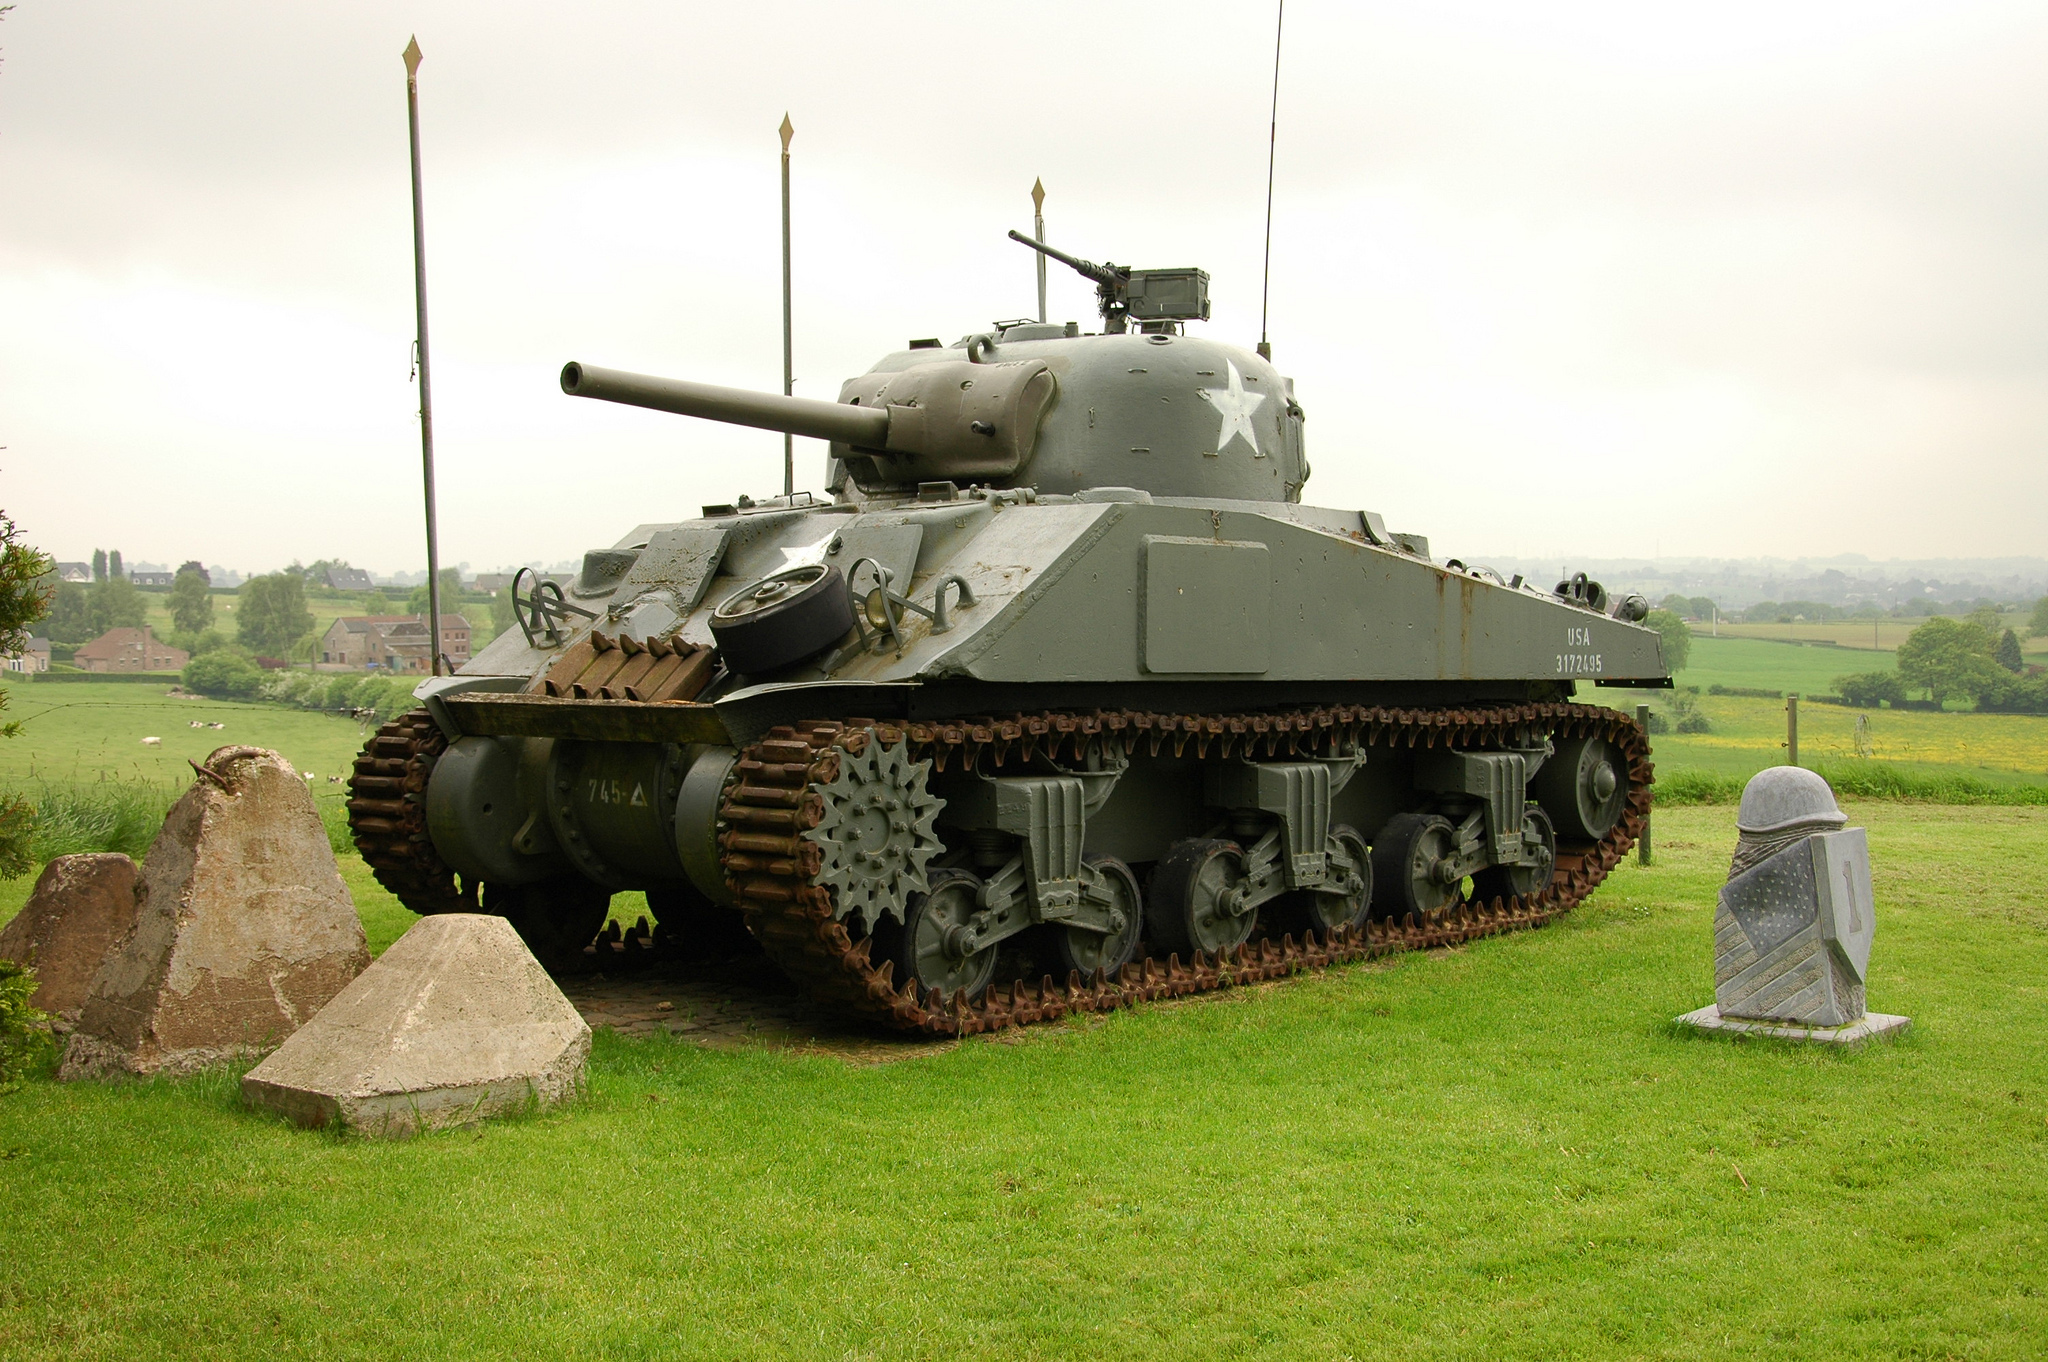 Wo tank. Танк m4 Sherman. Танк 2 мировой войны Шерман. Американский танк "Шерман". Американский танк второй мировой войны Шерман.